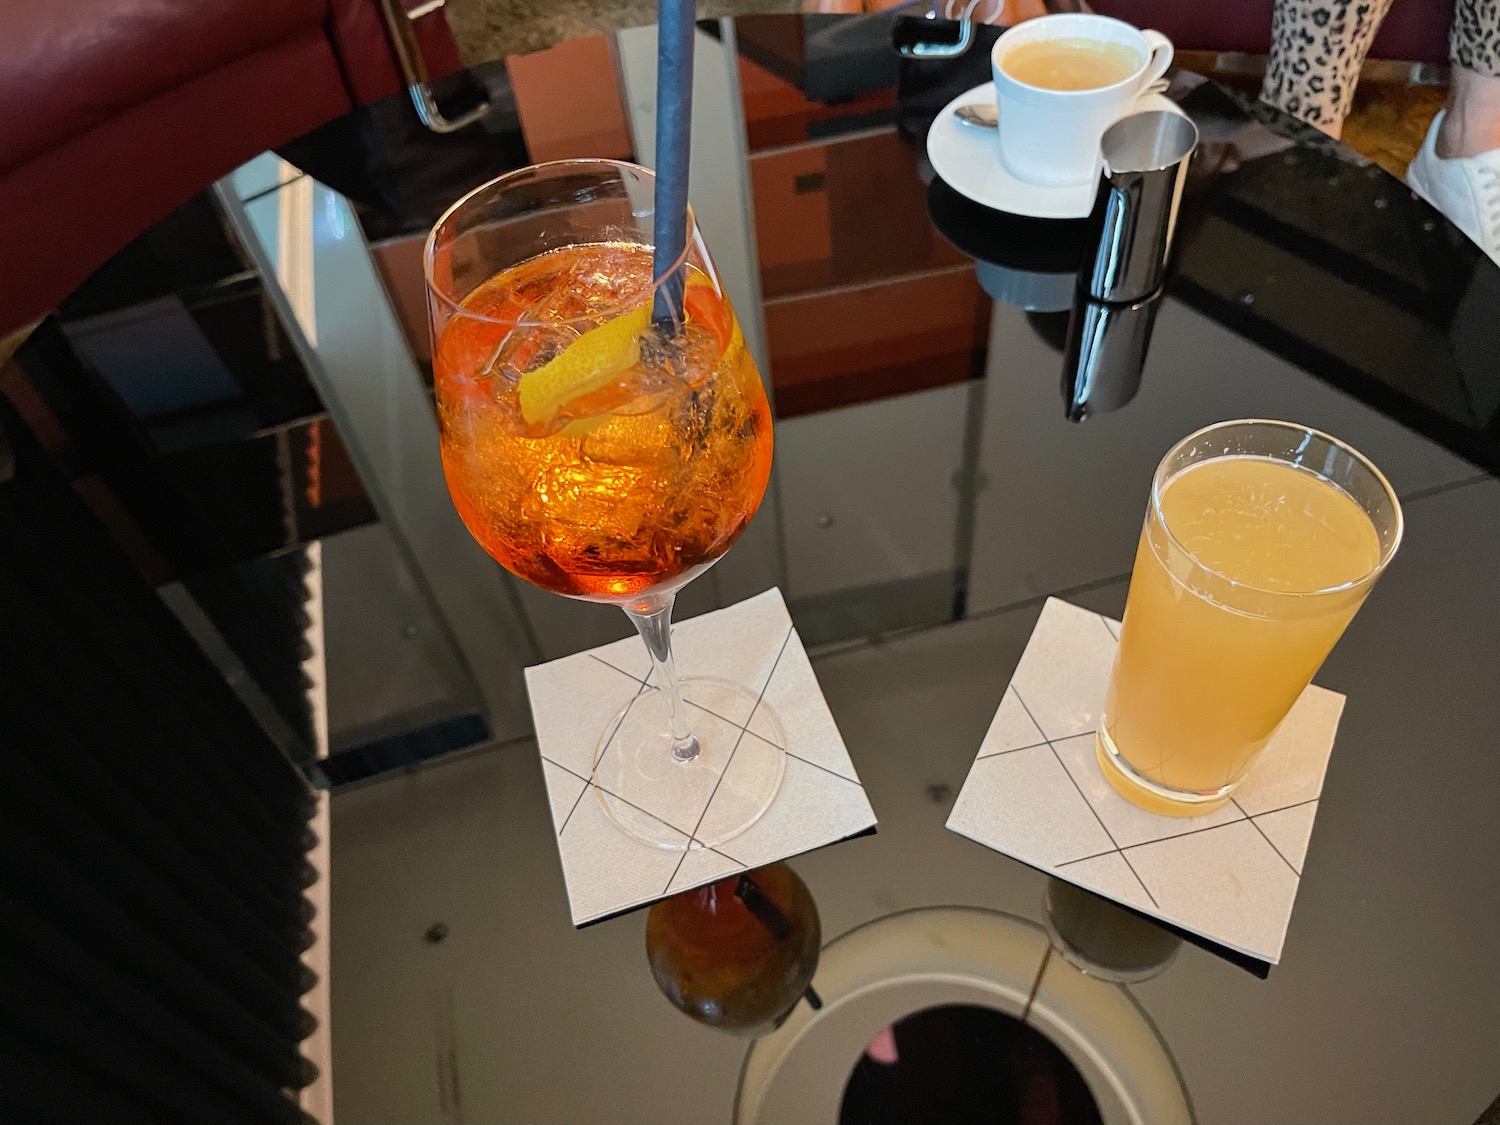 a glass of orange liquid and a glass of orange liquid on a table